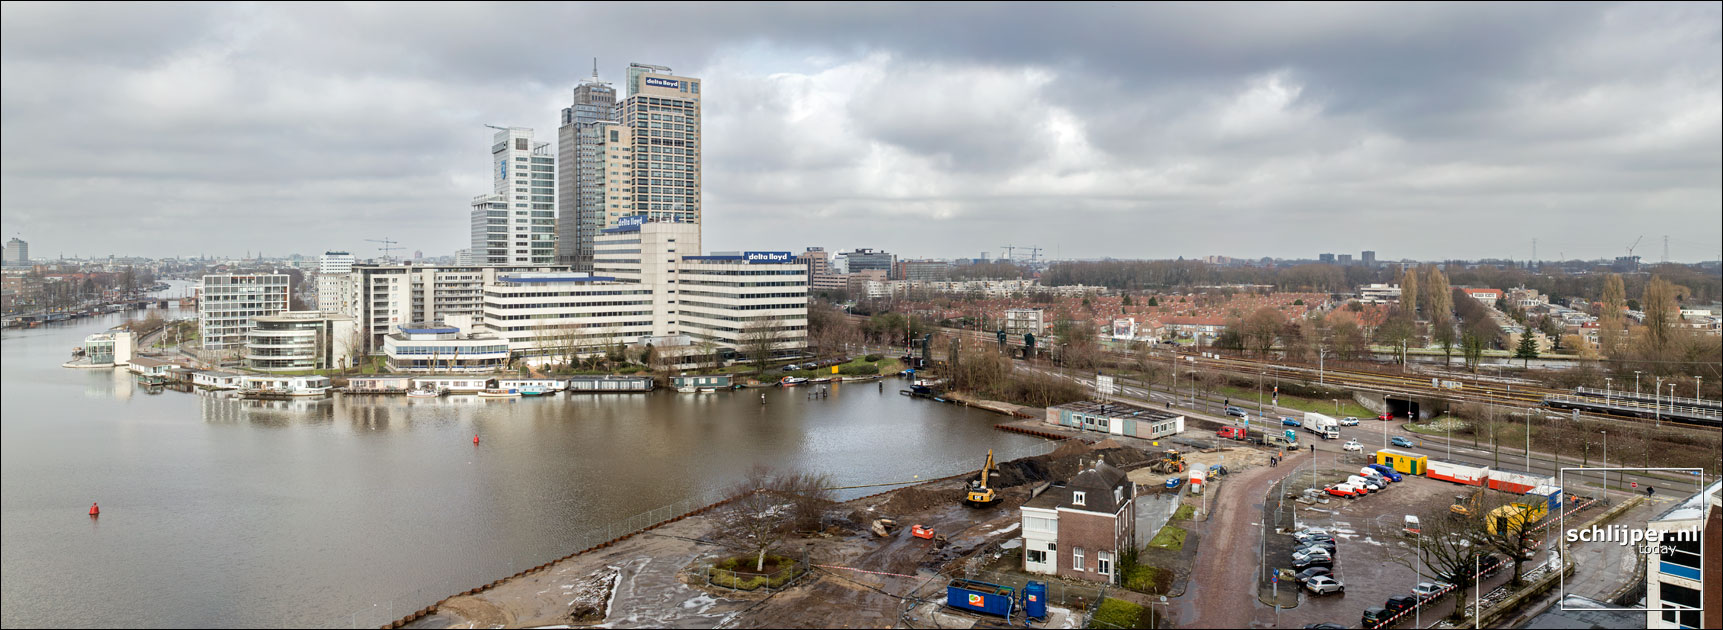 Nederland, Amsterdam, 15 februari 2013